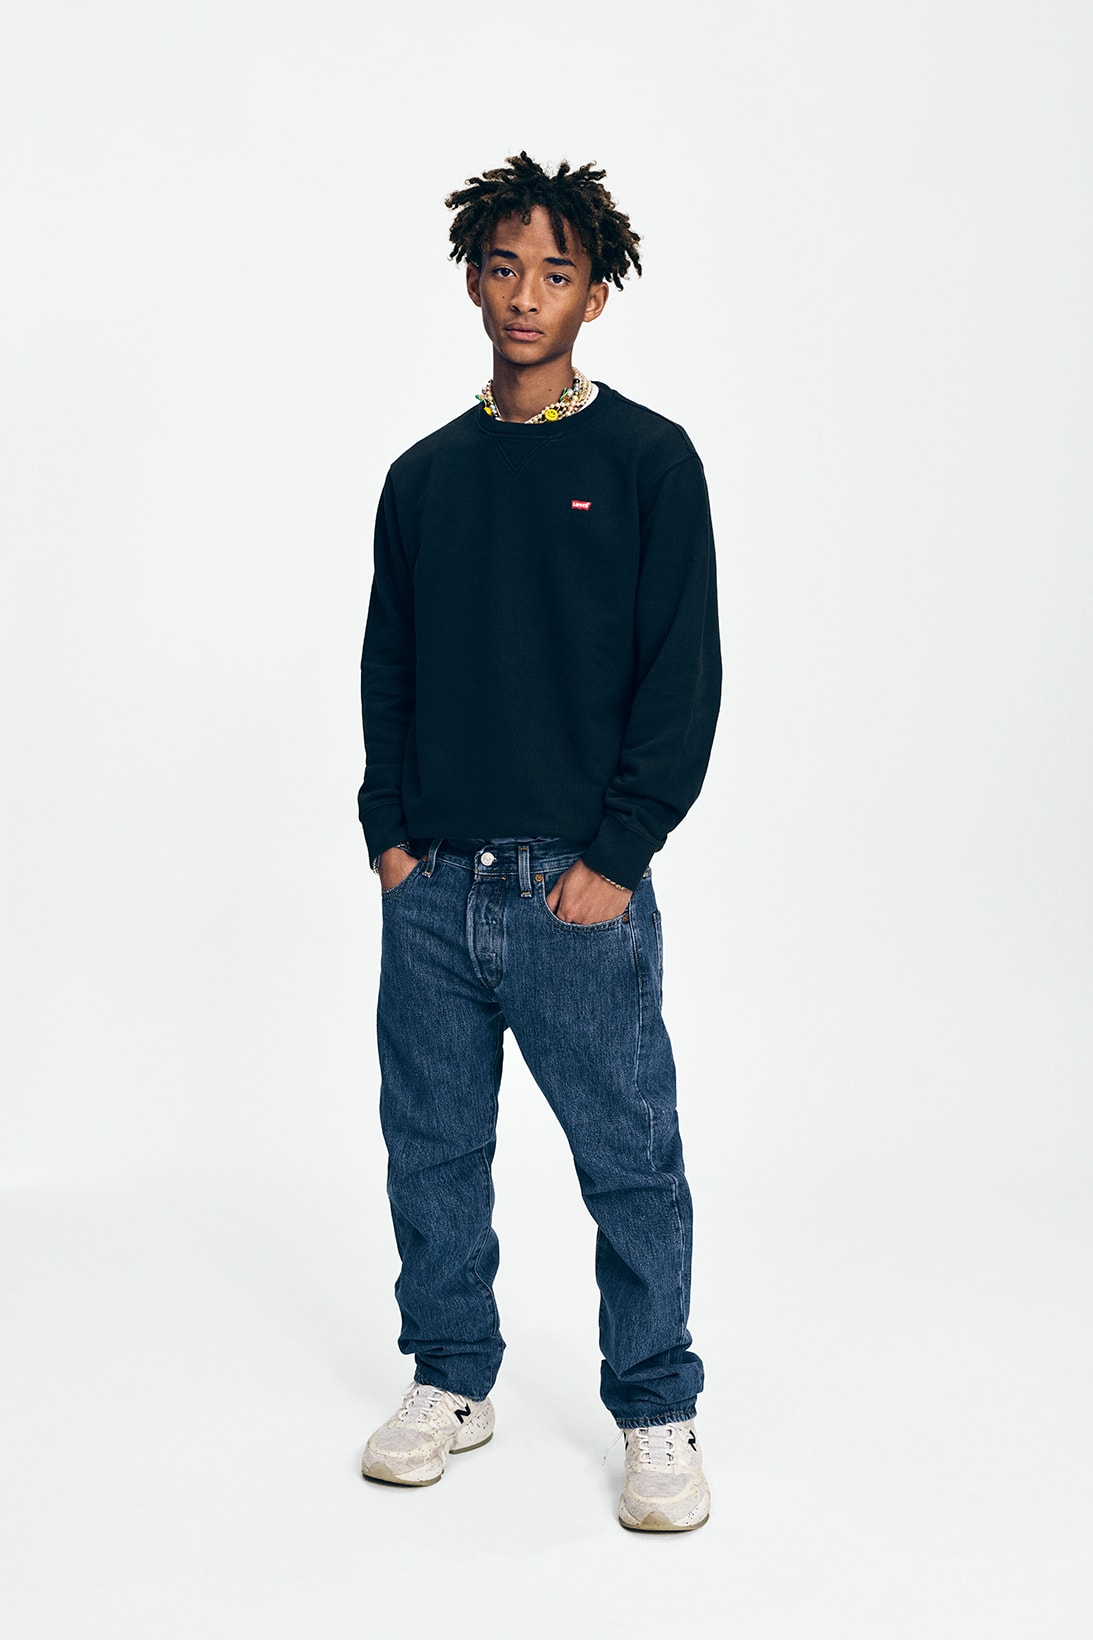 Levi's 501 Originals Jeans Campaign jaden Smith Sweater